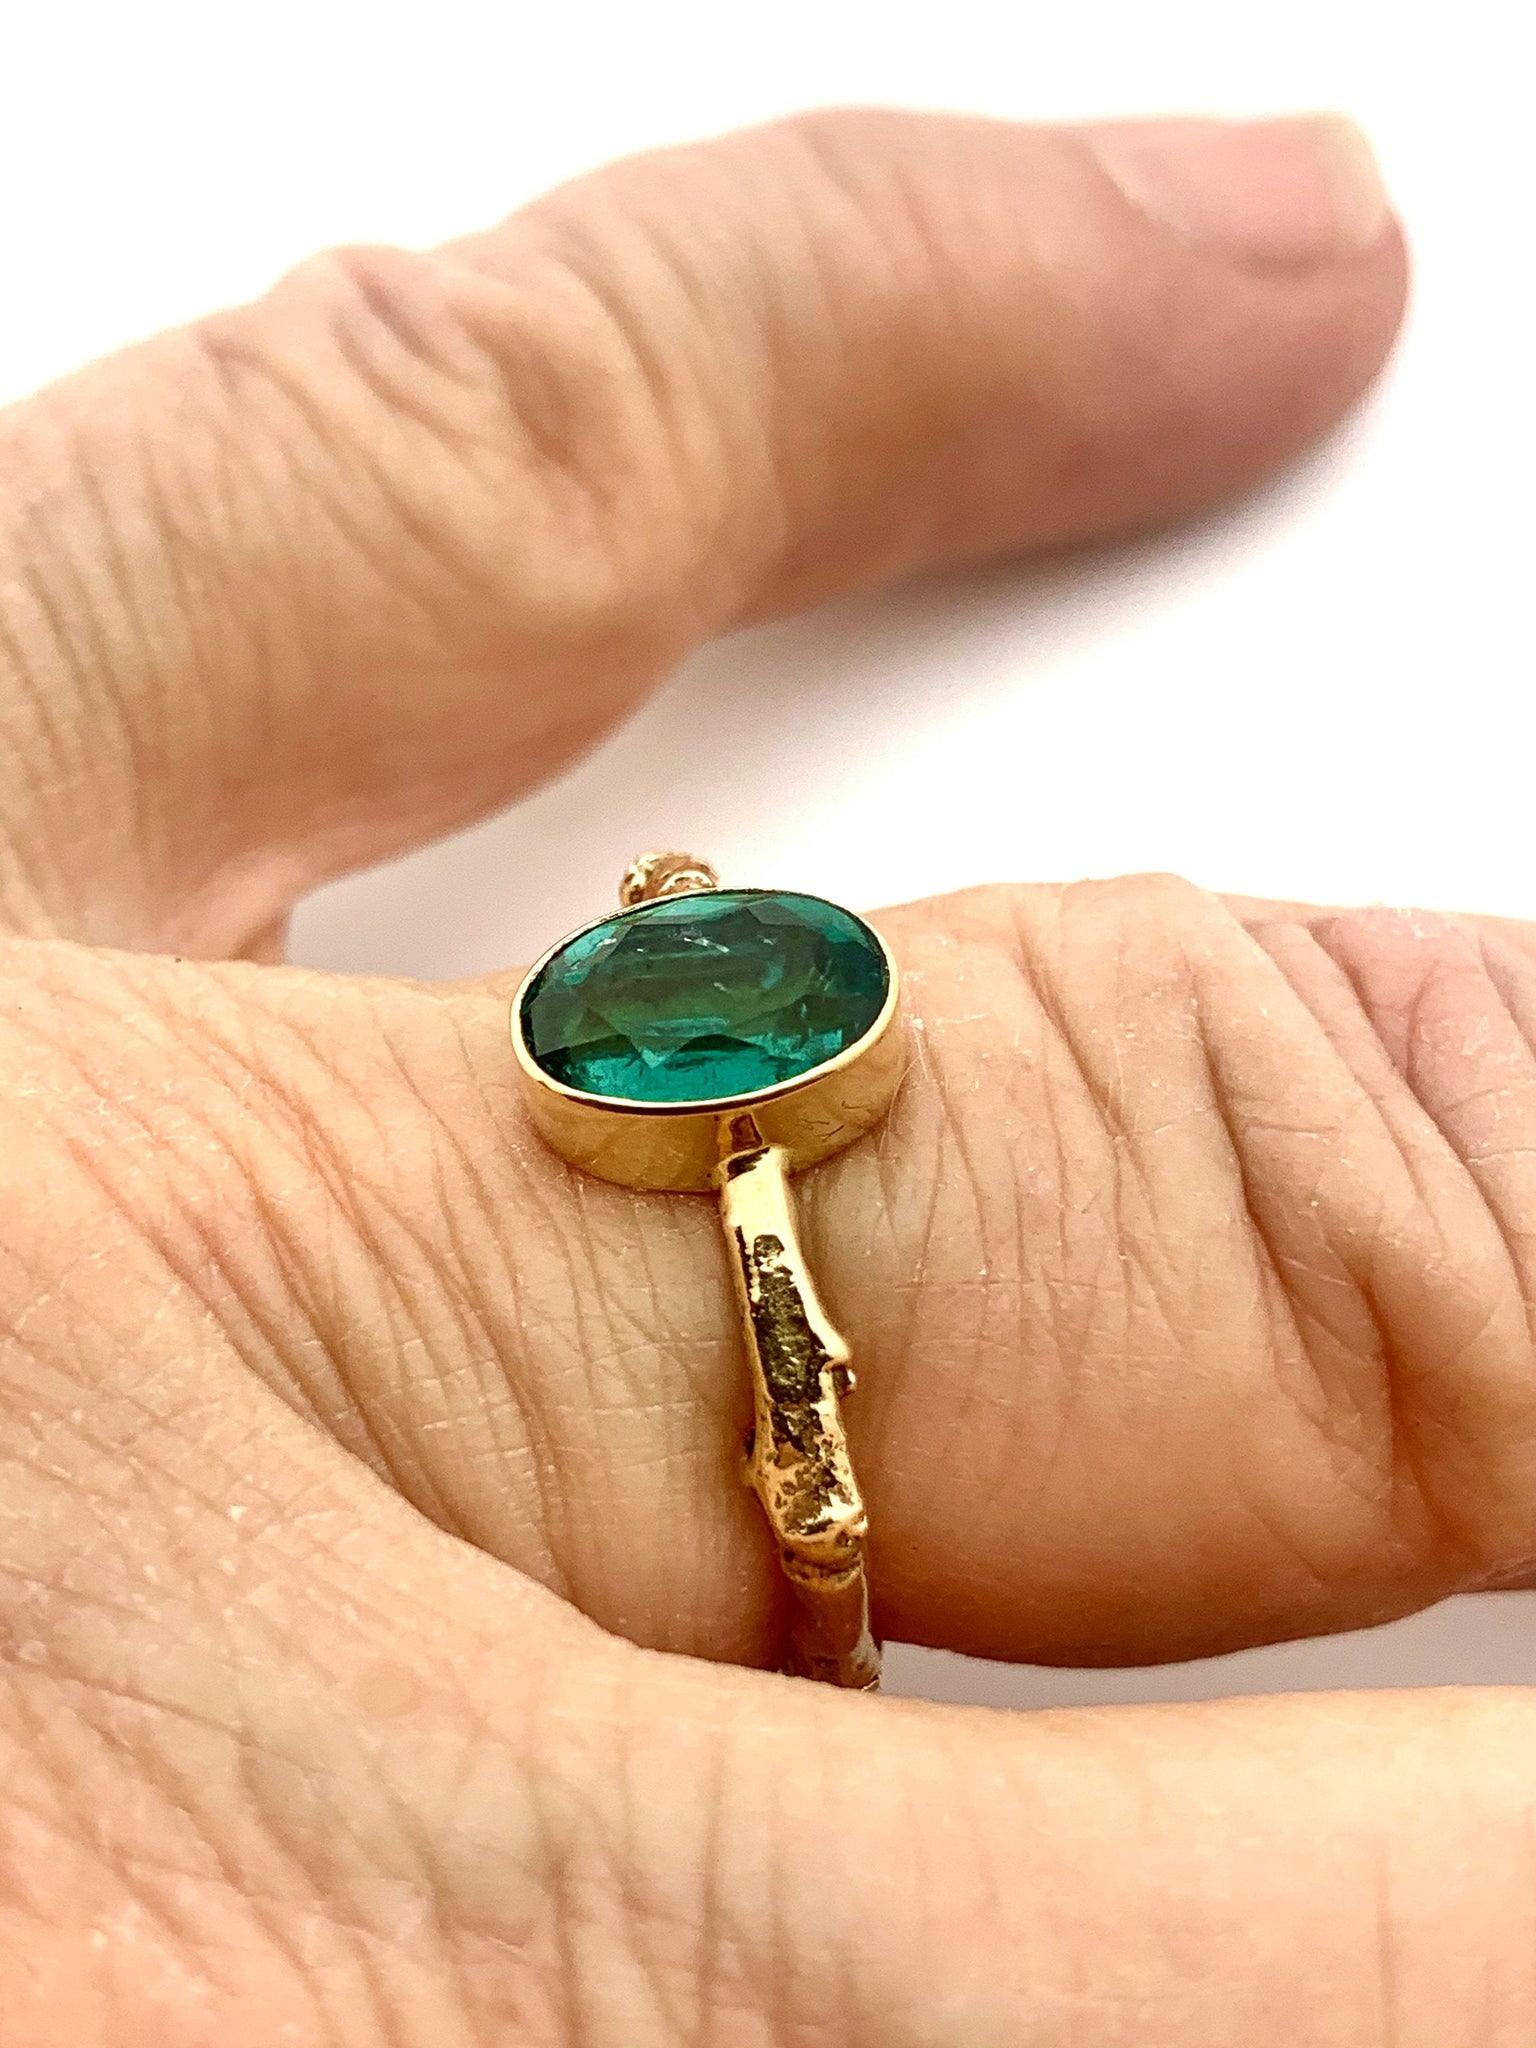 Green Tourmaline Ring 14k Gold, Statement Ring, Friendship Ring, Alternate Engagement Ring, OOAK gold gemstone ring, October Birthstone Ring